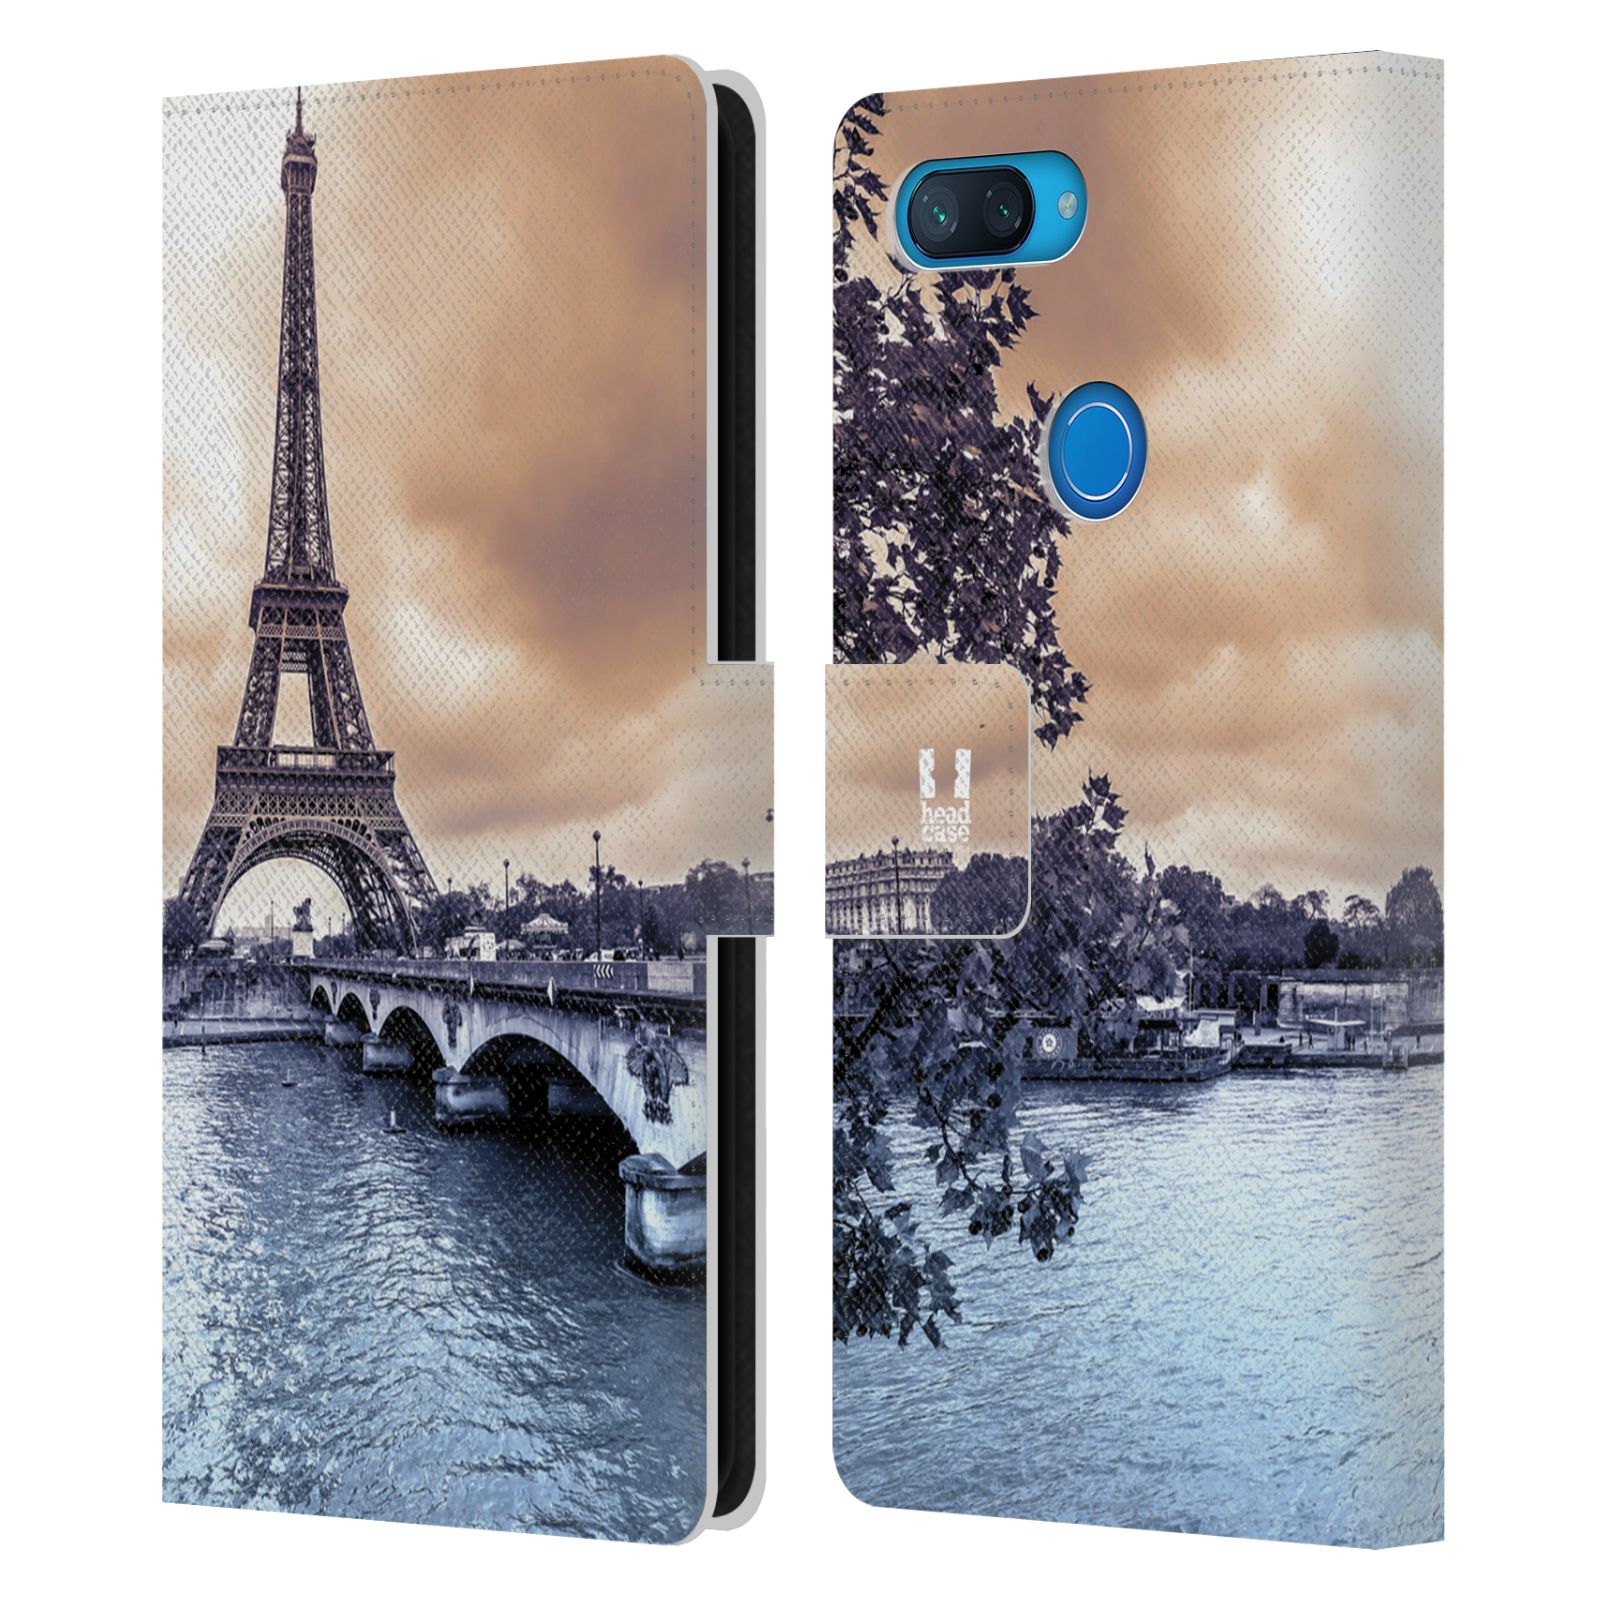 Pouzdro pro mobil Xiaomi Mi 8 LITE  - Eiffelova věž Paříž - Francie